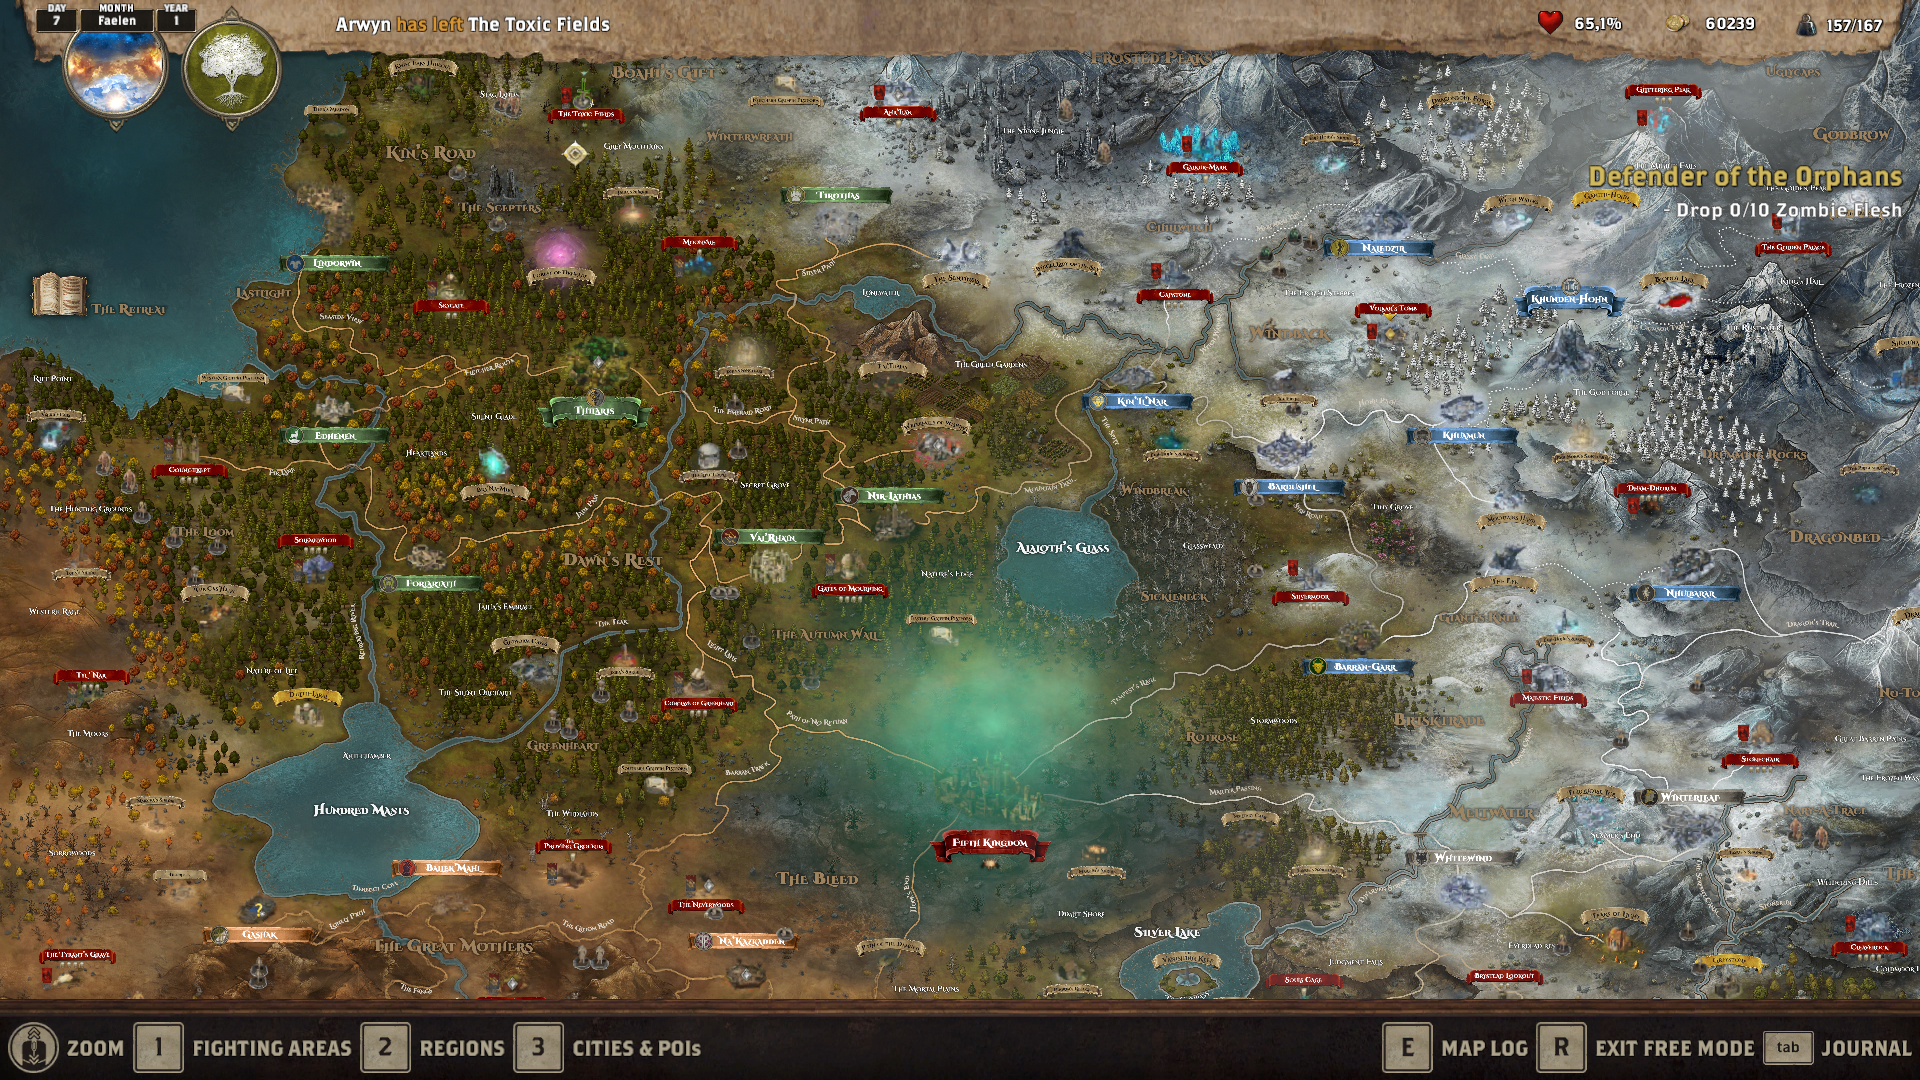 Print Screen da tela do mapa mundo de Alaloth Champions of the Four Kingdoms